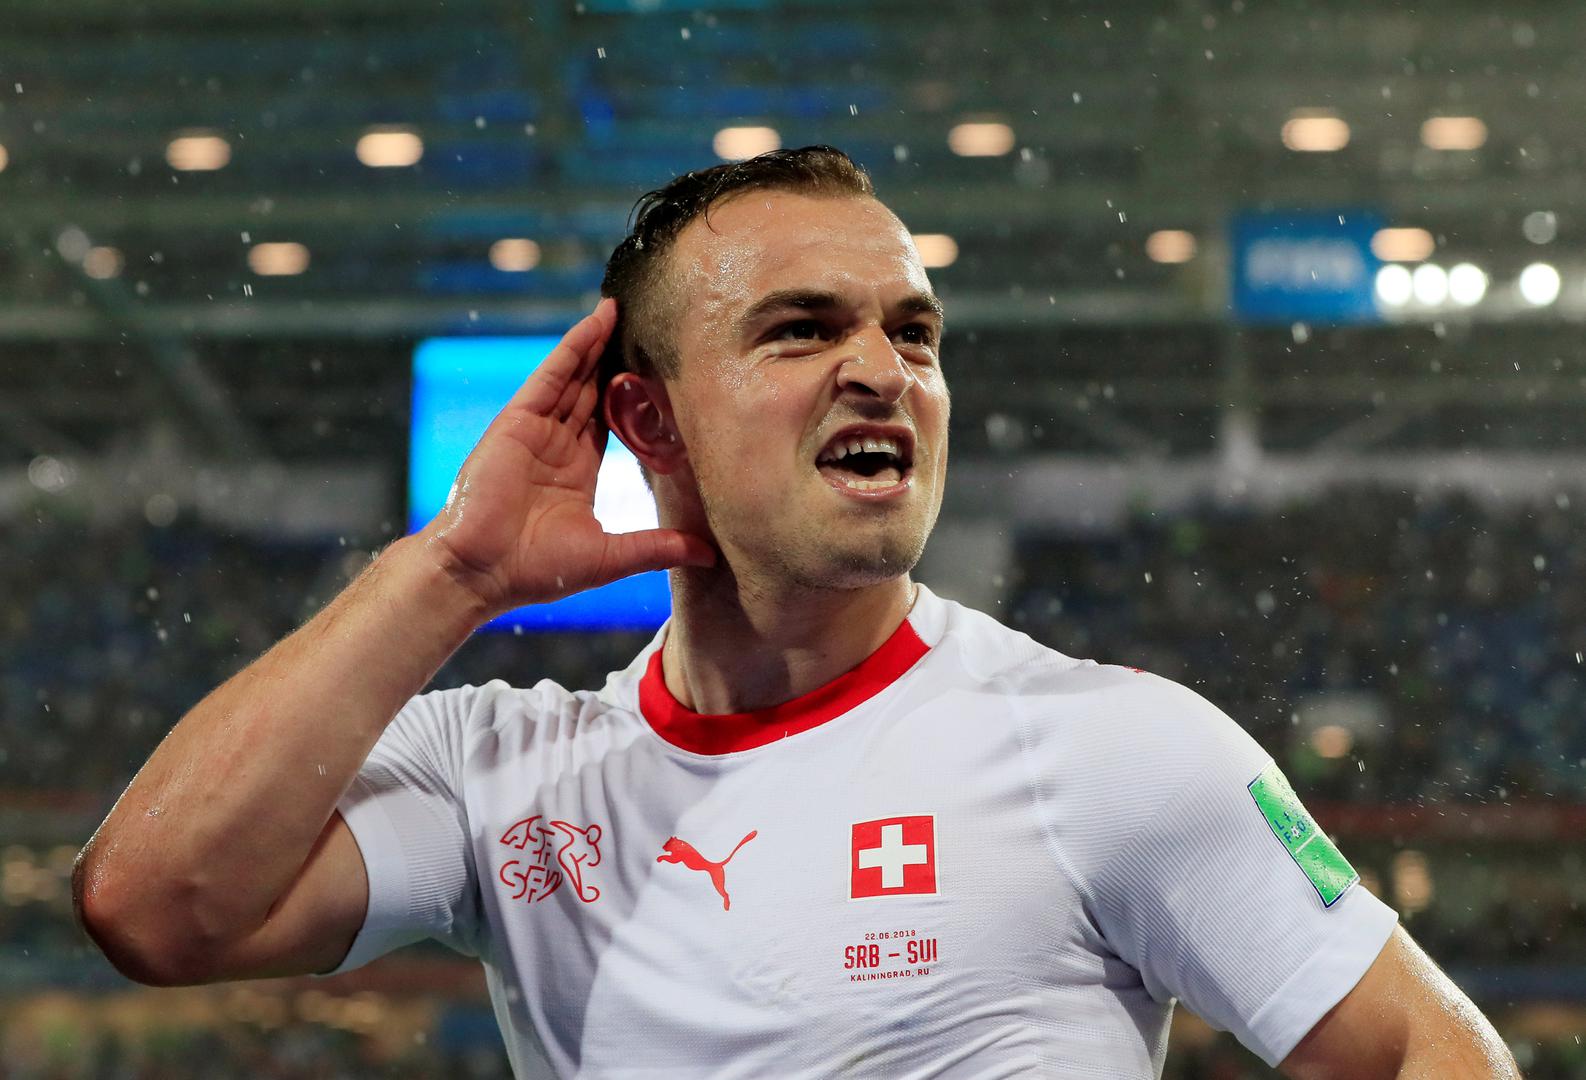 Pobjedu je Švicarcima golom u 90. minuti donio Xherdan Shaqiri.

